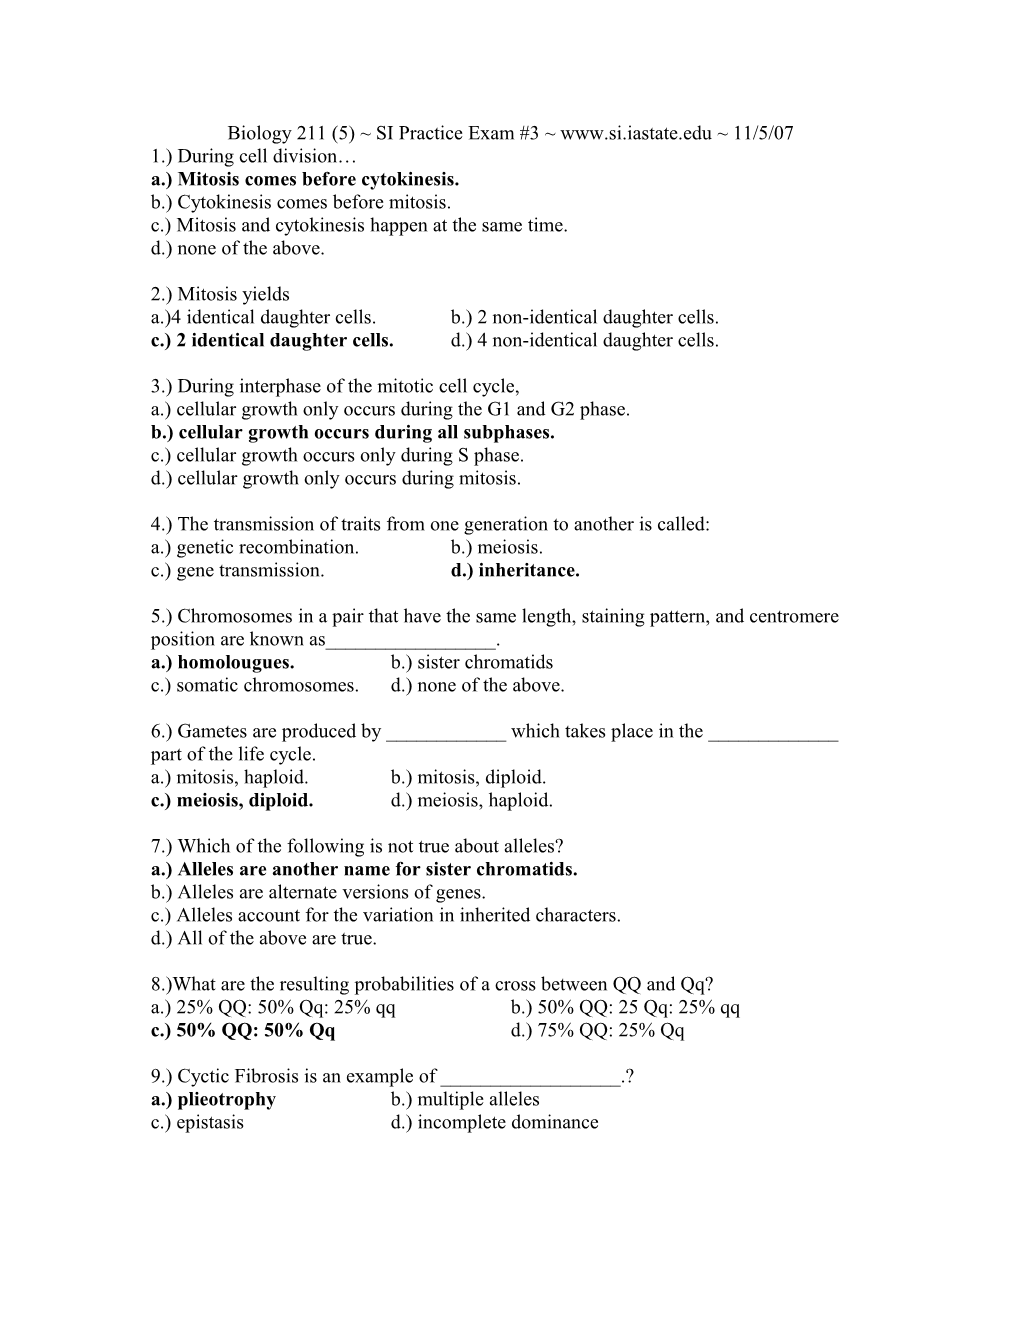 Biology 211 (5) SI Practice Exam #3 Www